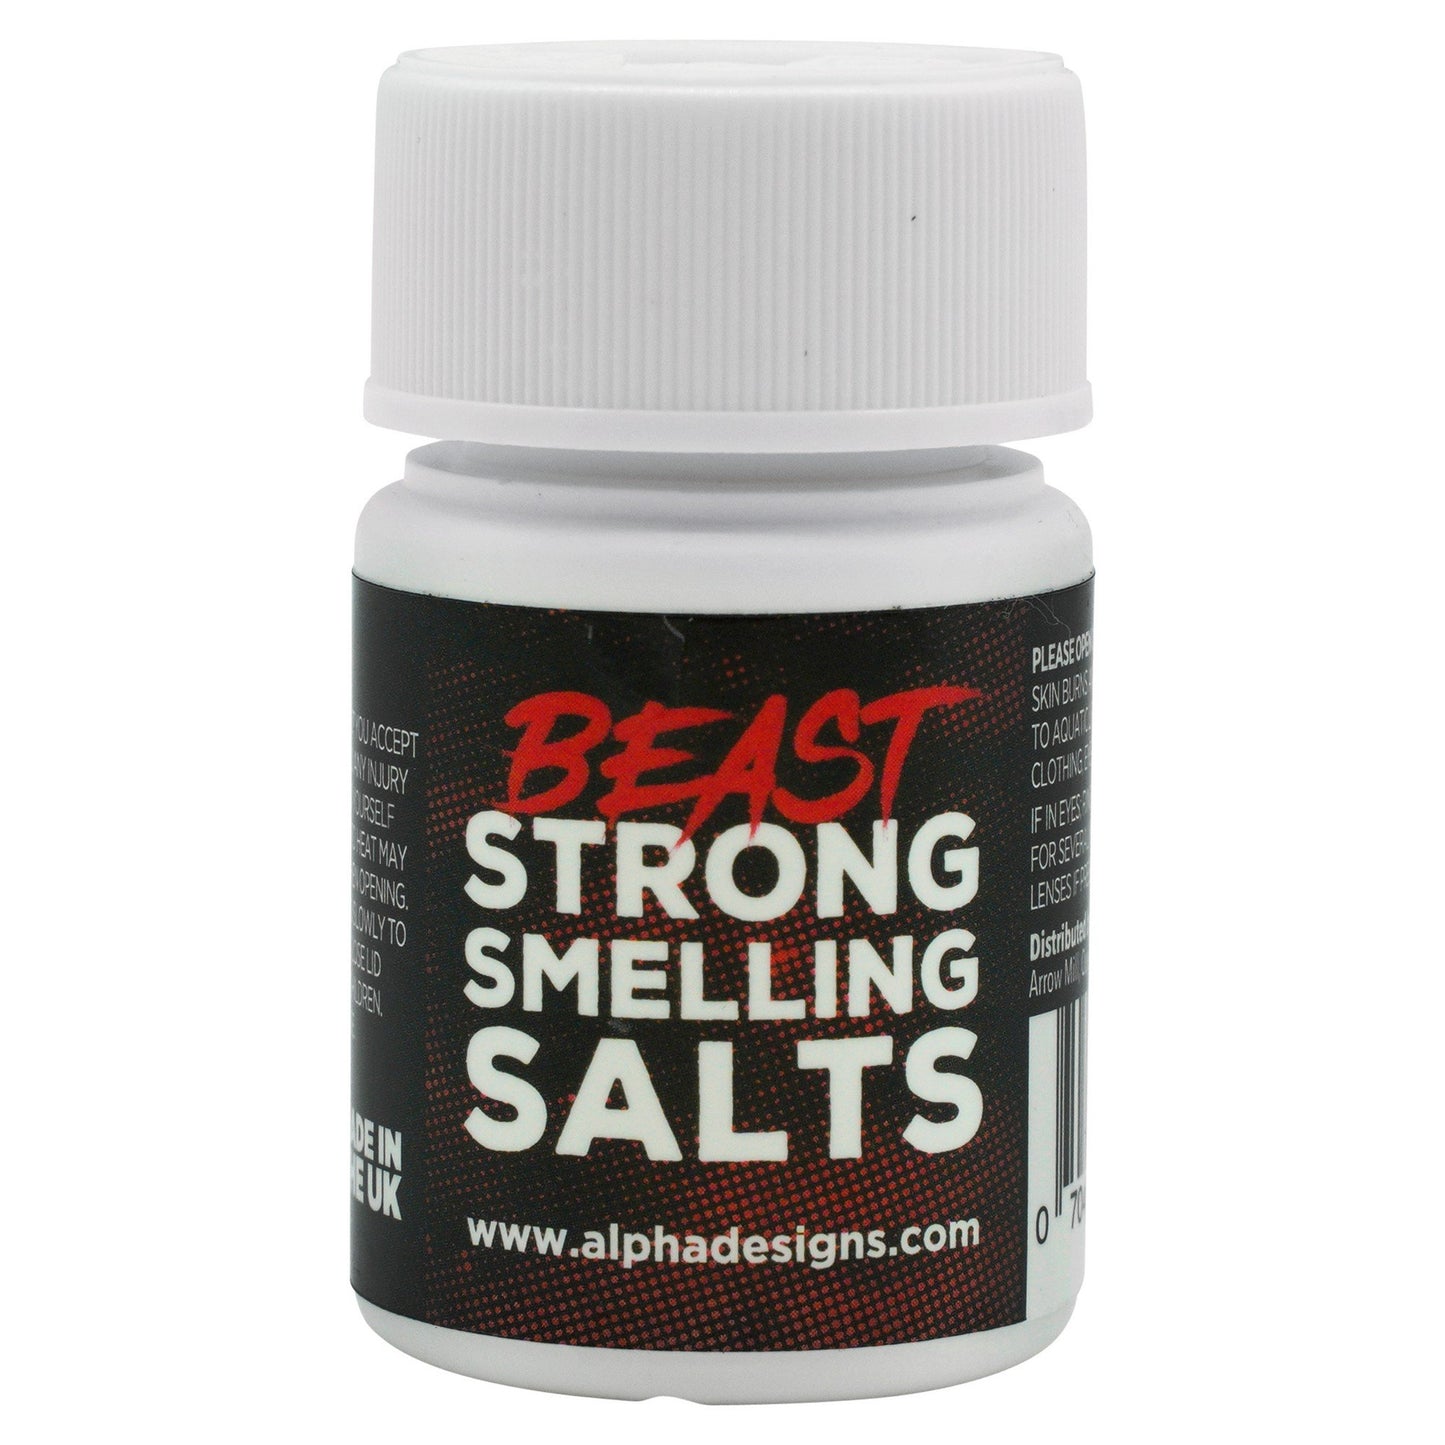 Alpha Designs Beast Strong Smelling Salts